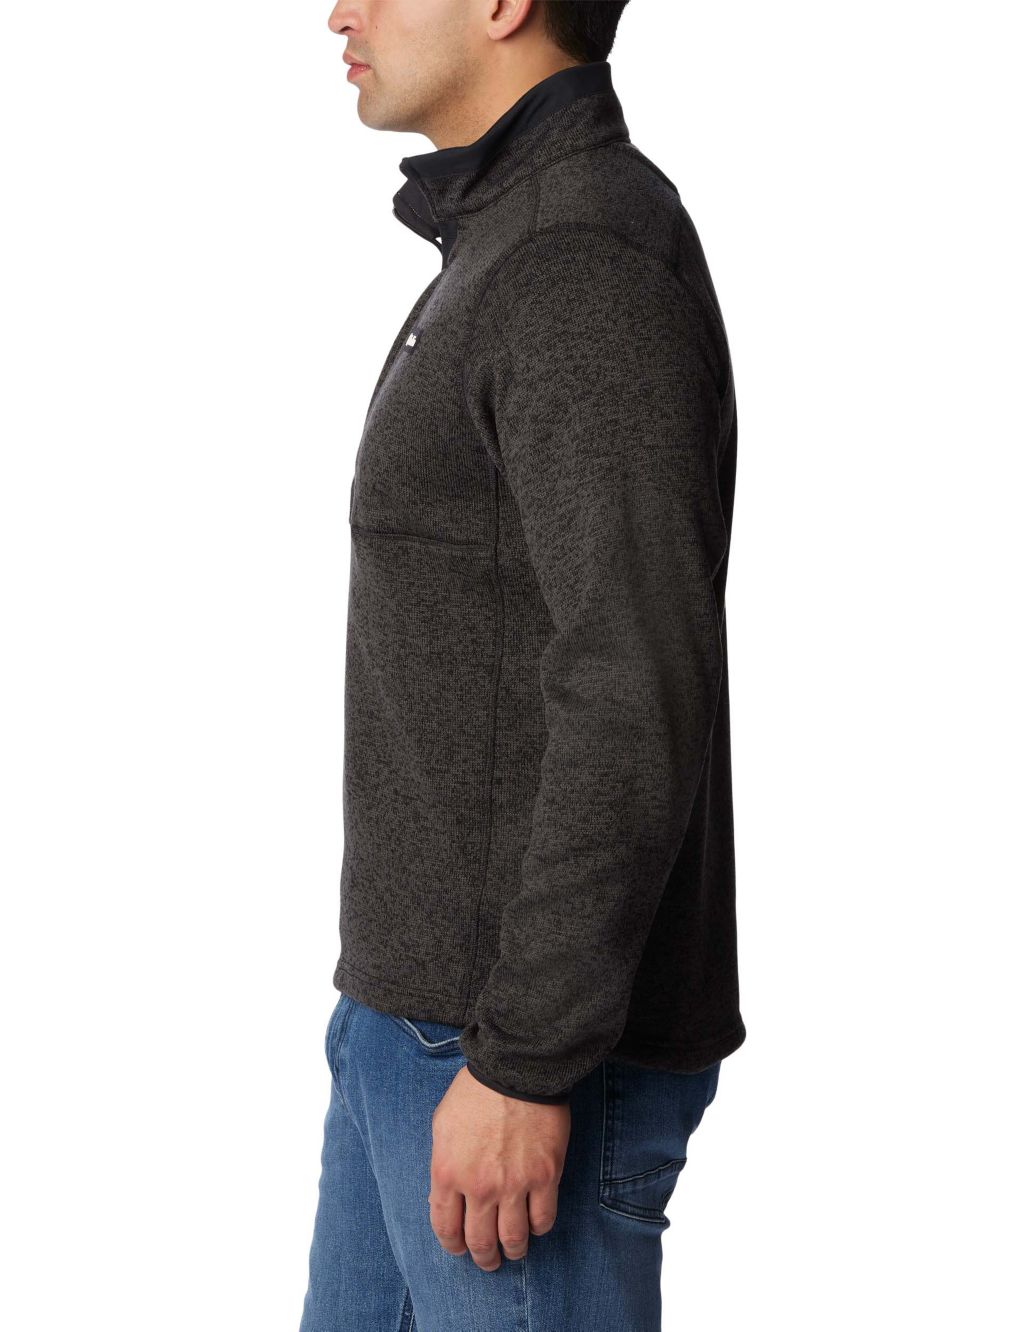 Sweater Weather Fleece Half Zip Jacket image 2